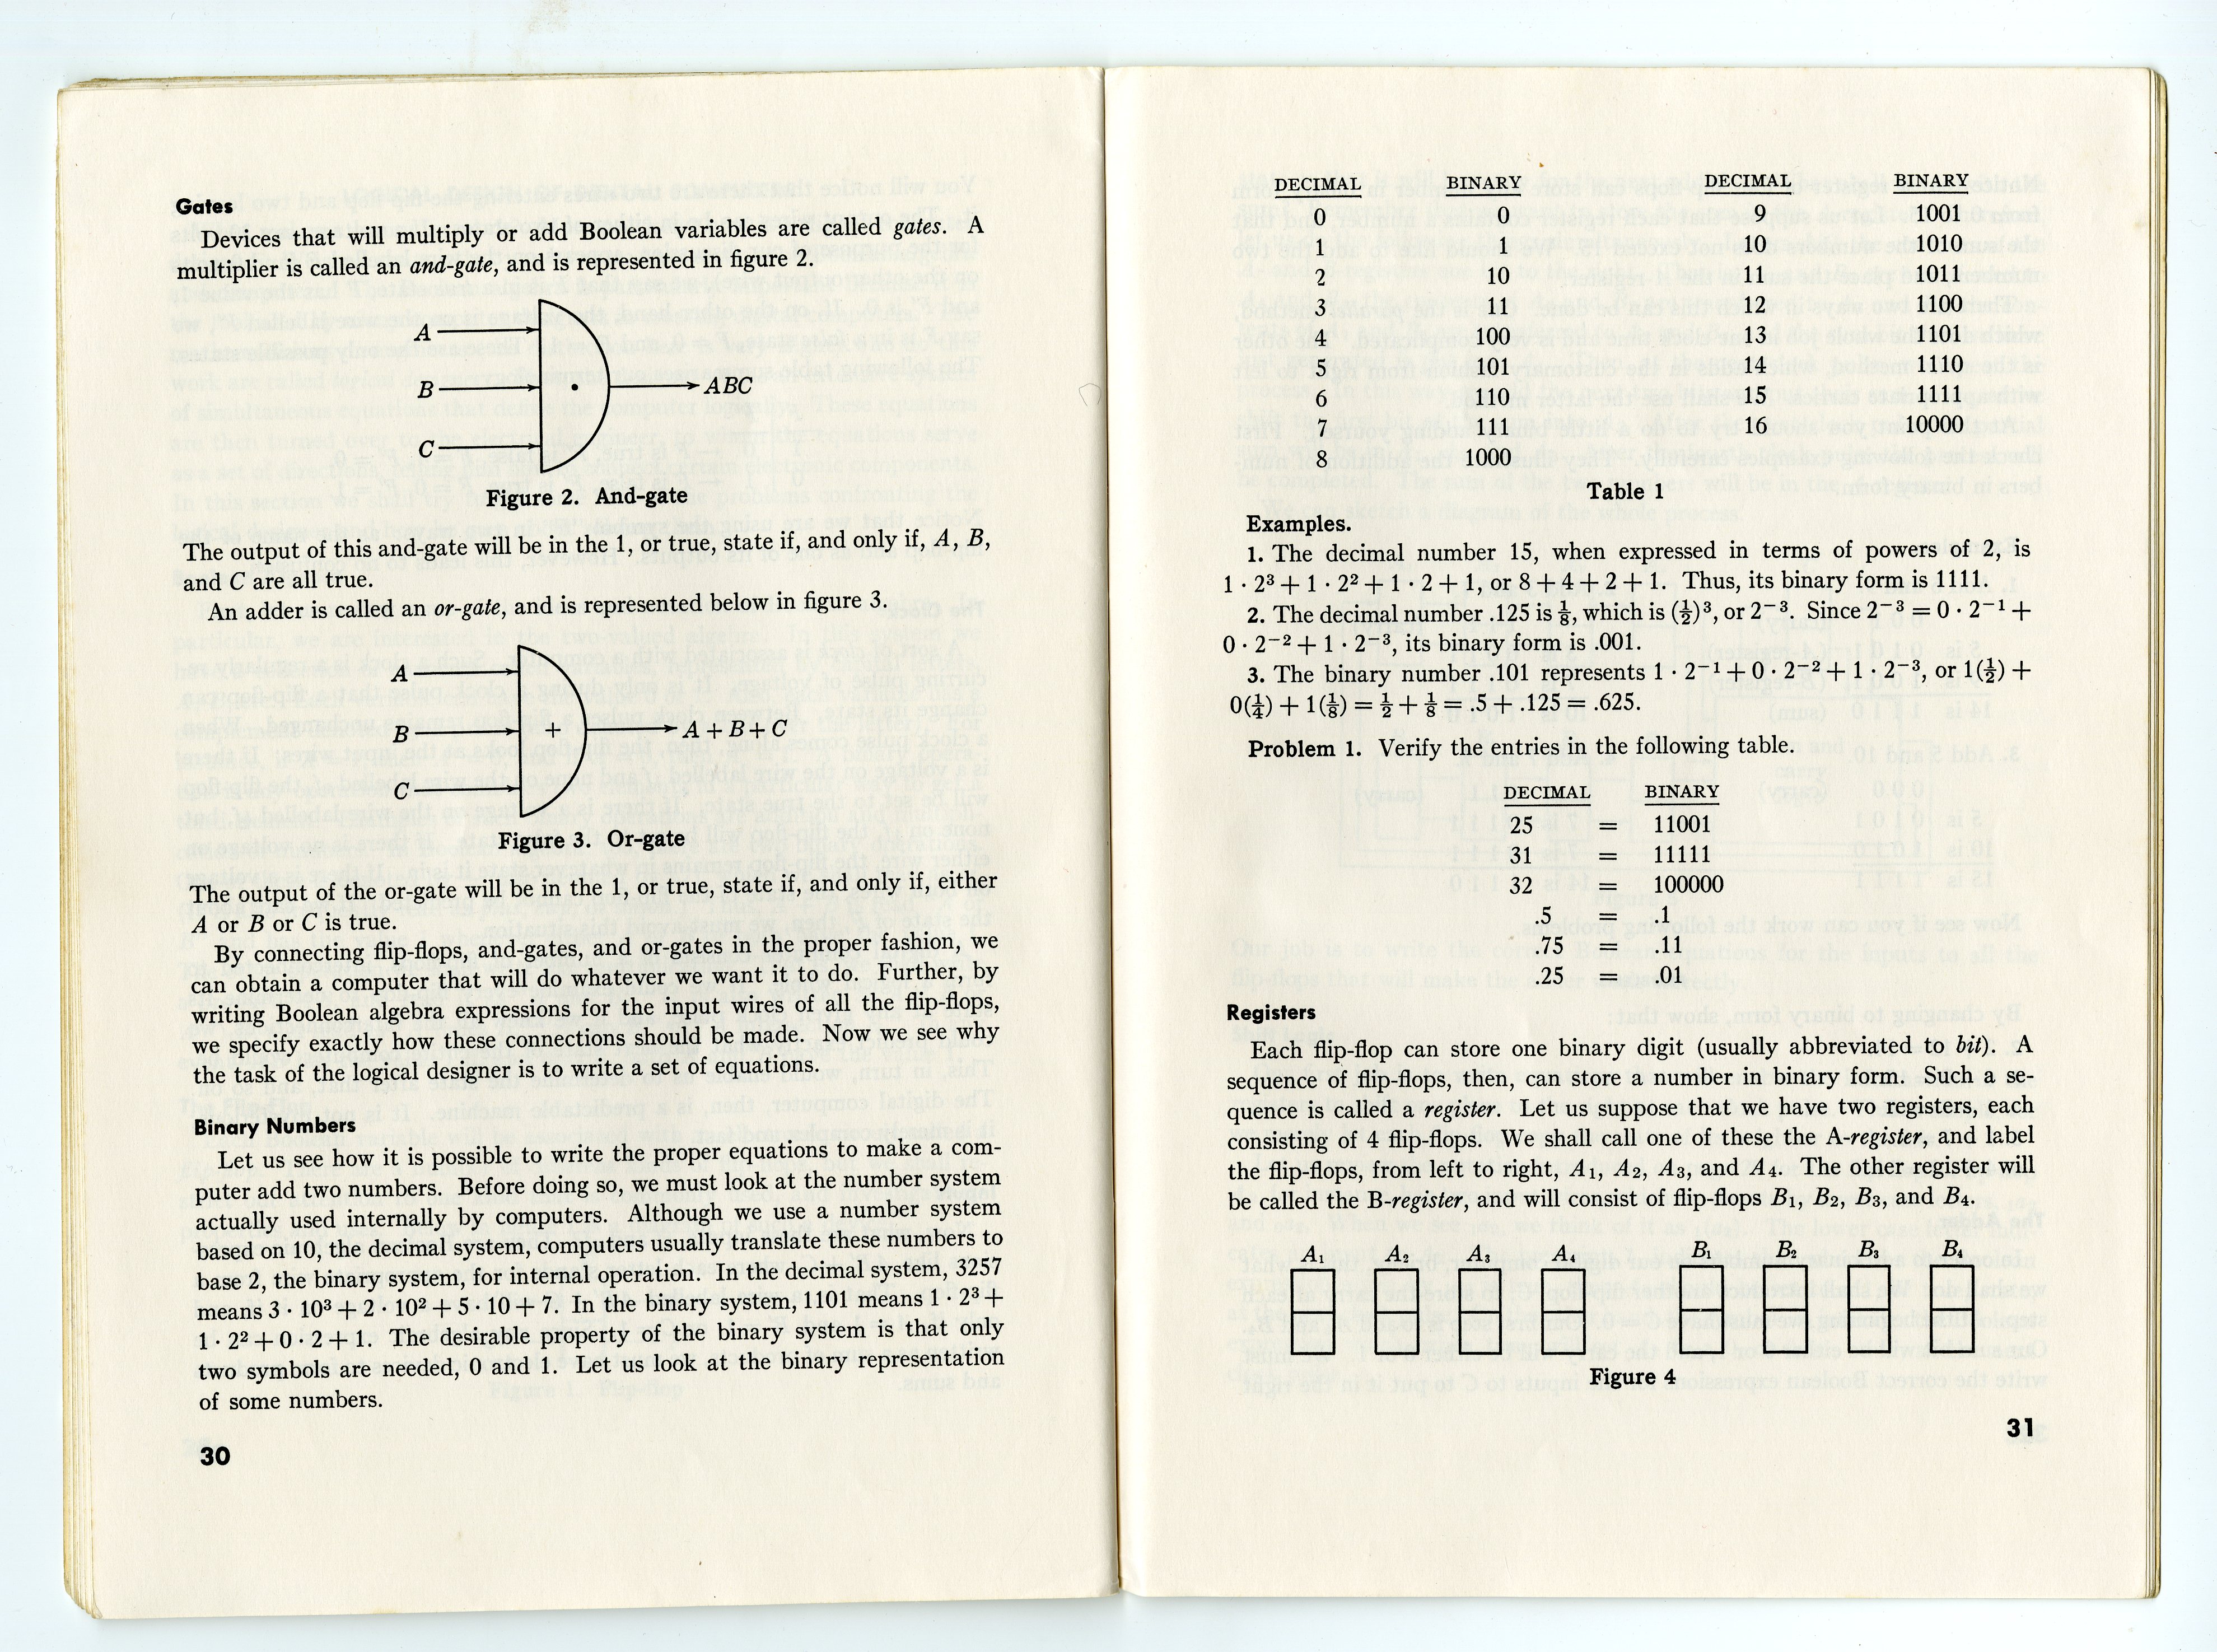 Mathematics Book 1961 continued